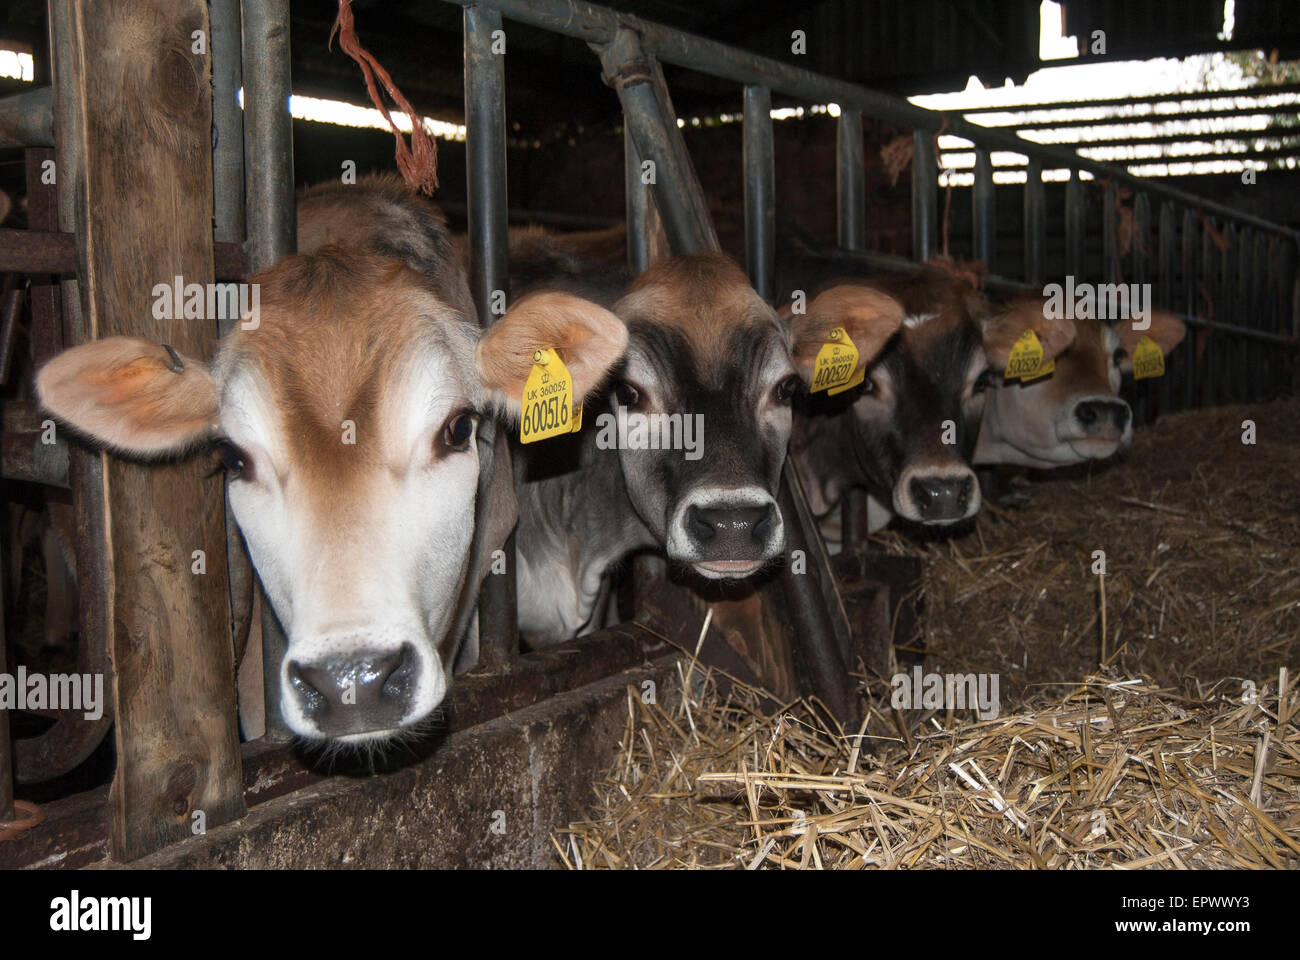 Four cows staring, taken in Devonshire, UK. Stock Photo